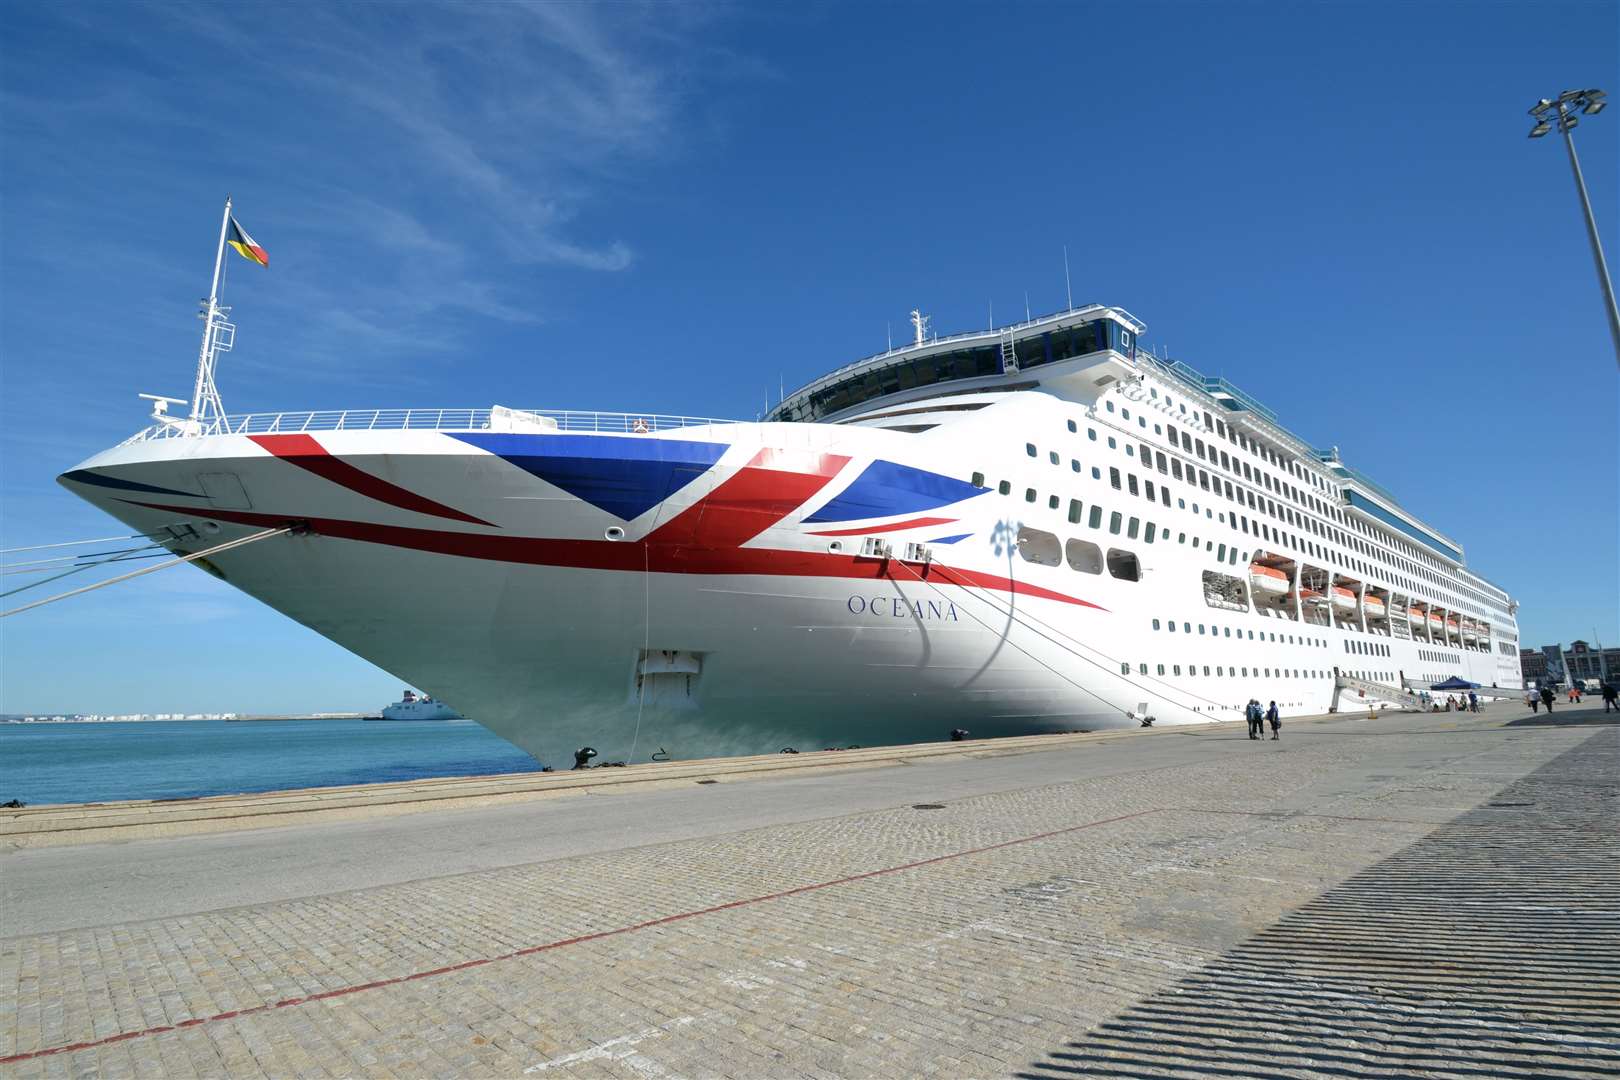 The Oceana cruise ship. Picture: Steve Salter